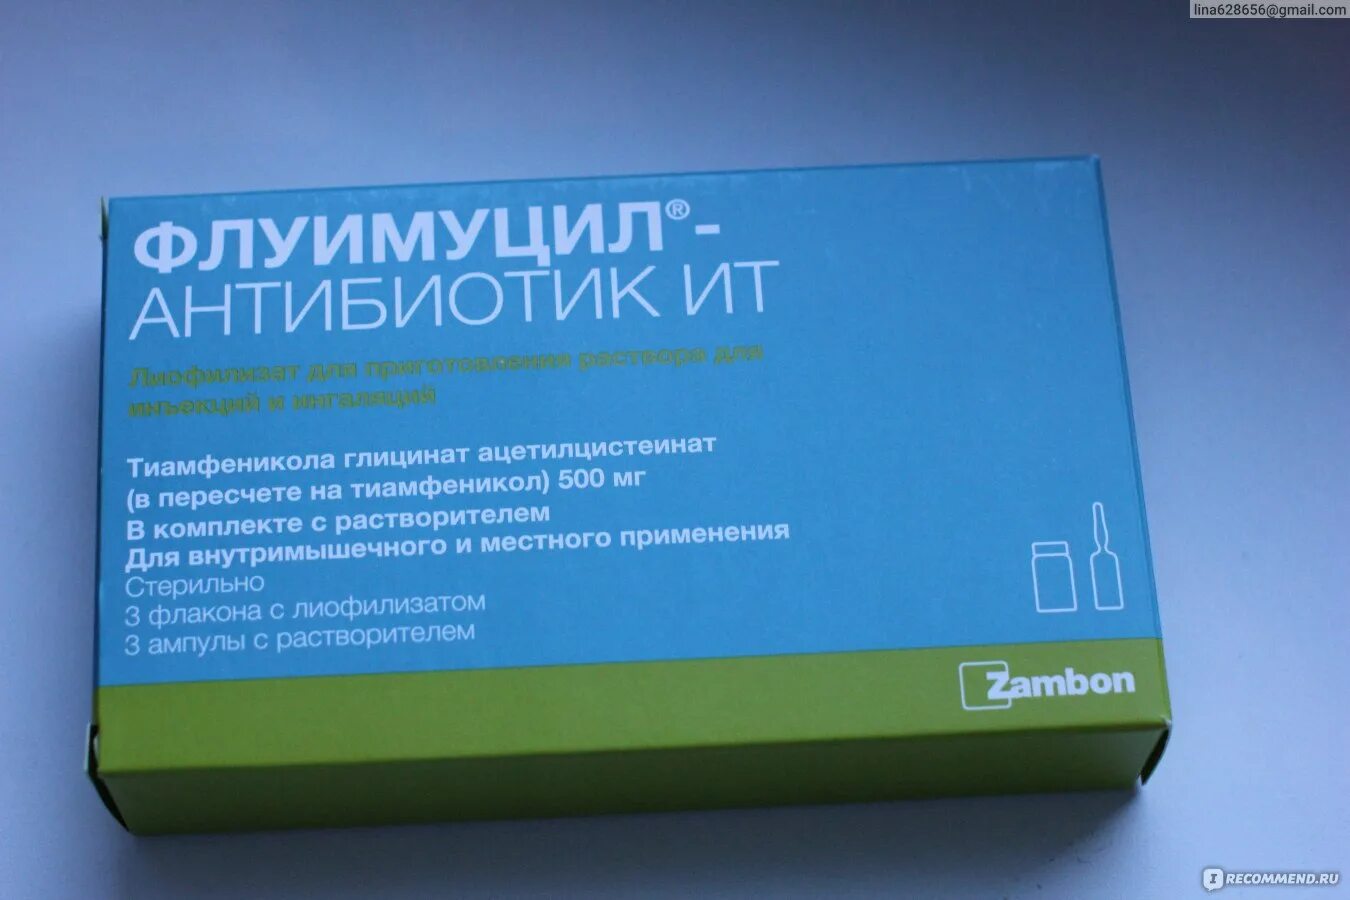 Флуимуцил антибиотик ИТ 250. Флуимуцил 125 мг. Флуимуцил-антибиотик ИТ 250 мг для ингаляций. Флуимуцил-антибиотик ИТ 125 мг. После ингаляции флуимуцилом